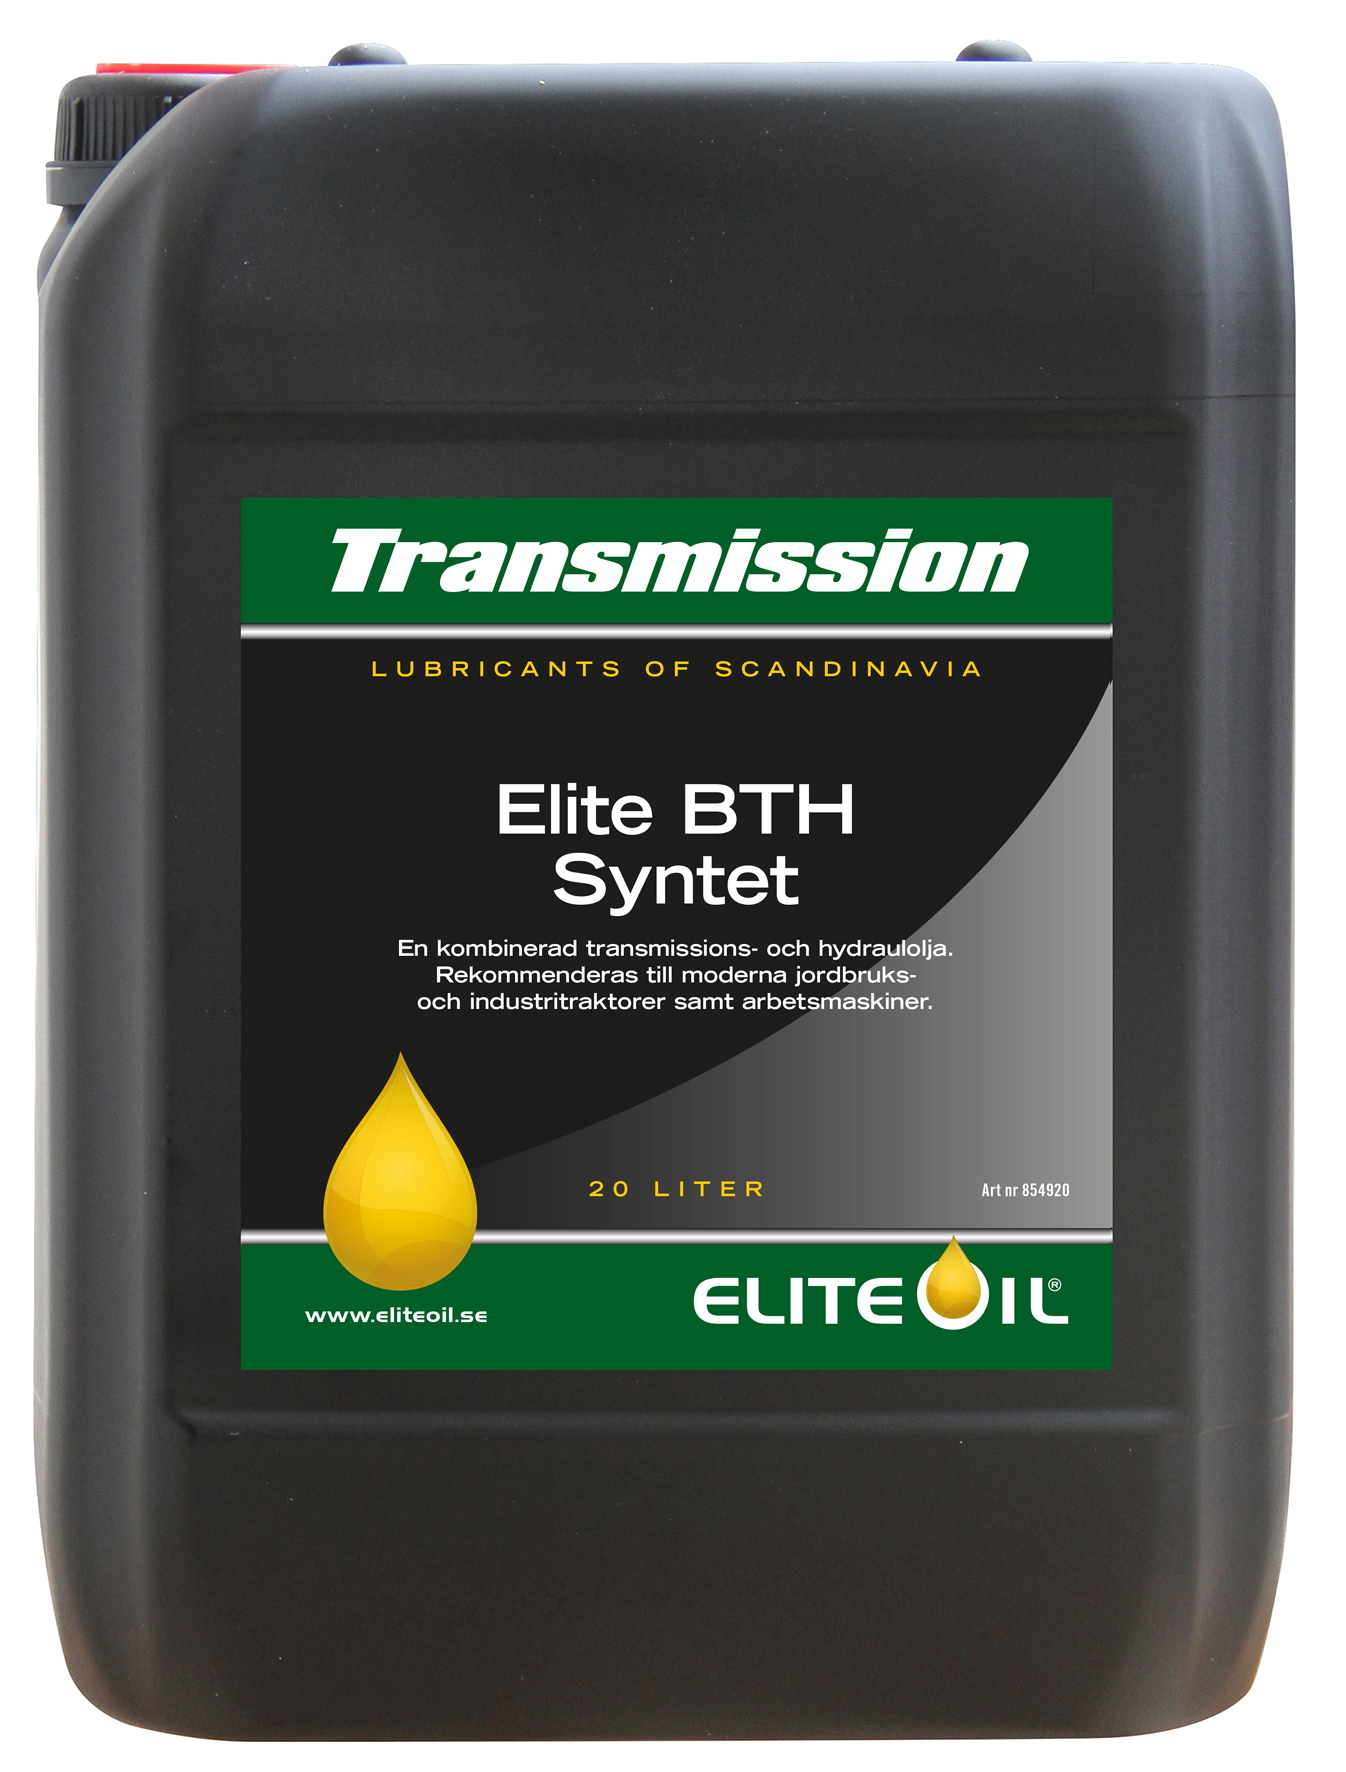 Elite BTH Syntet, 20 liter dunk-image